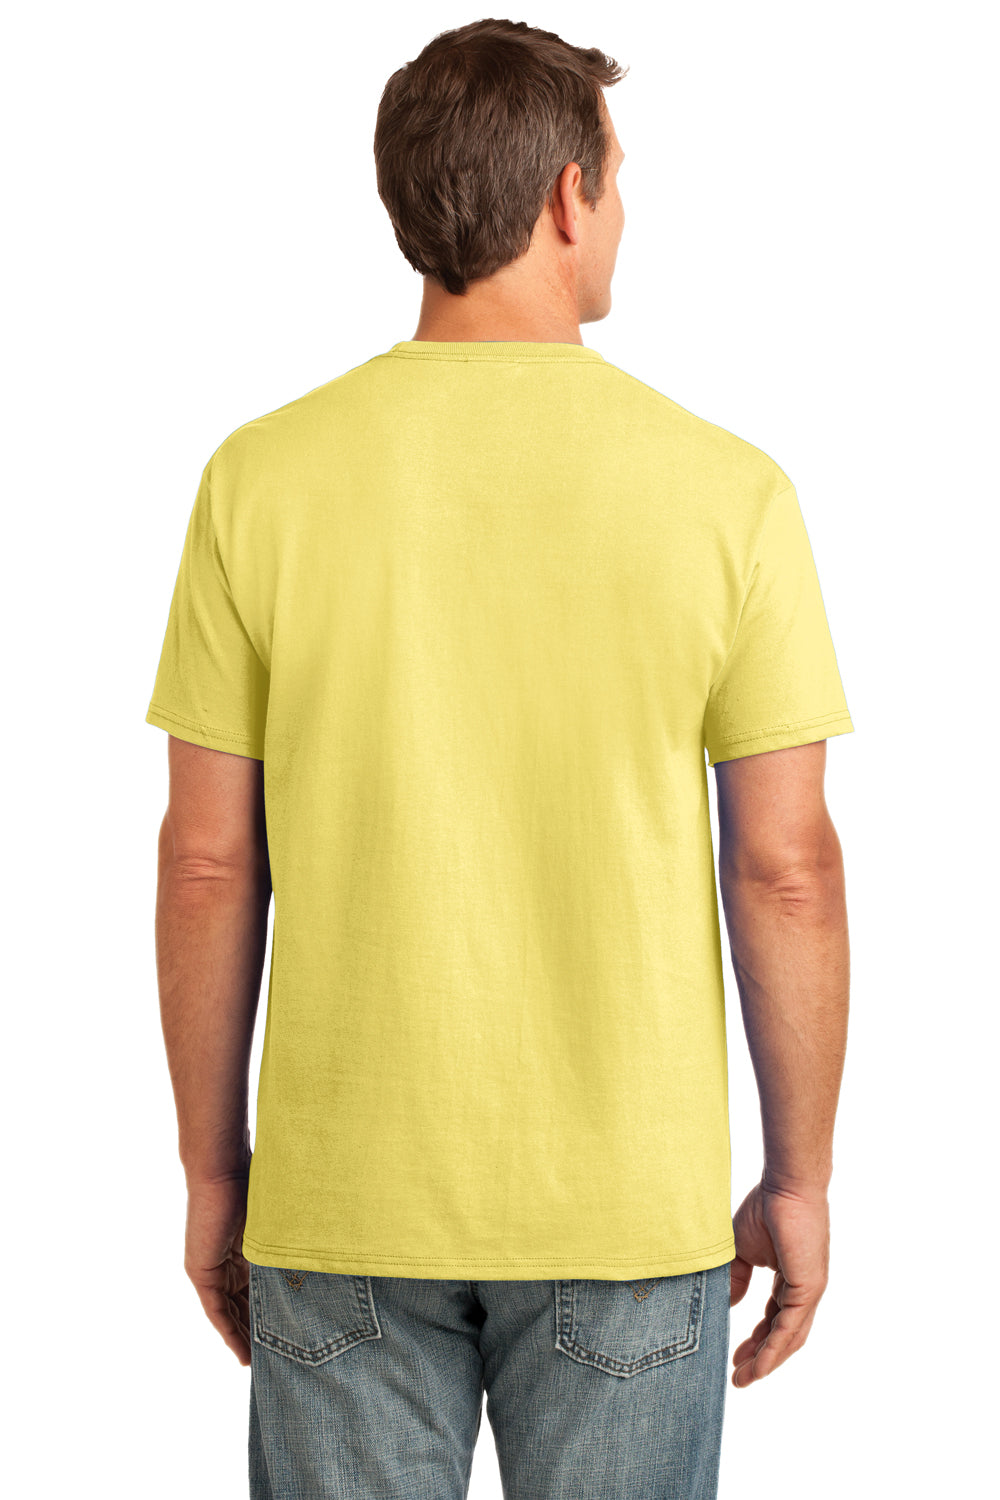 Port & Company PC54P Mens Core Short Sleeve Crewneck T-Shirt w/ Pocket Yellow Back